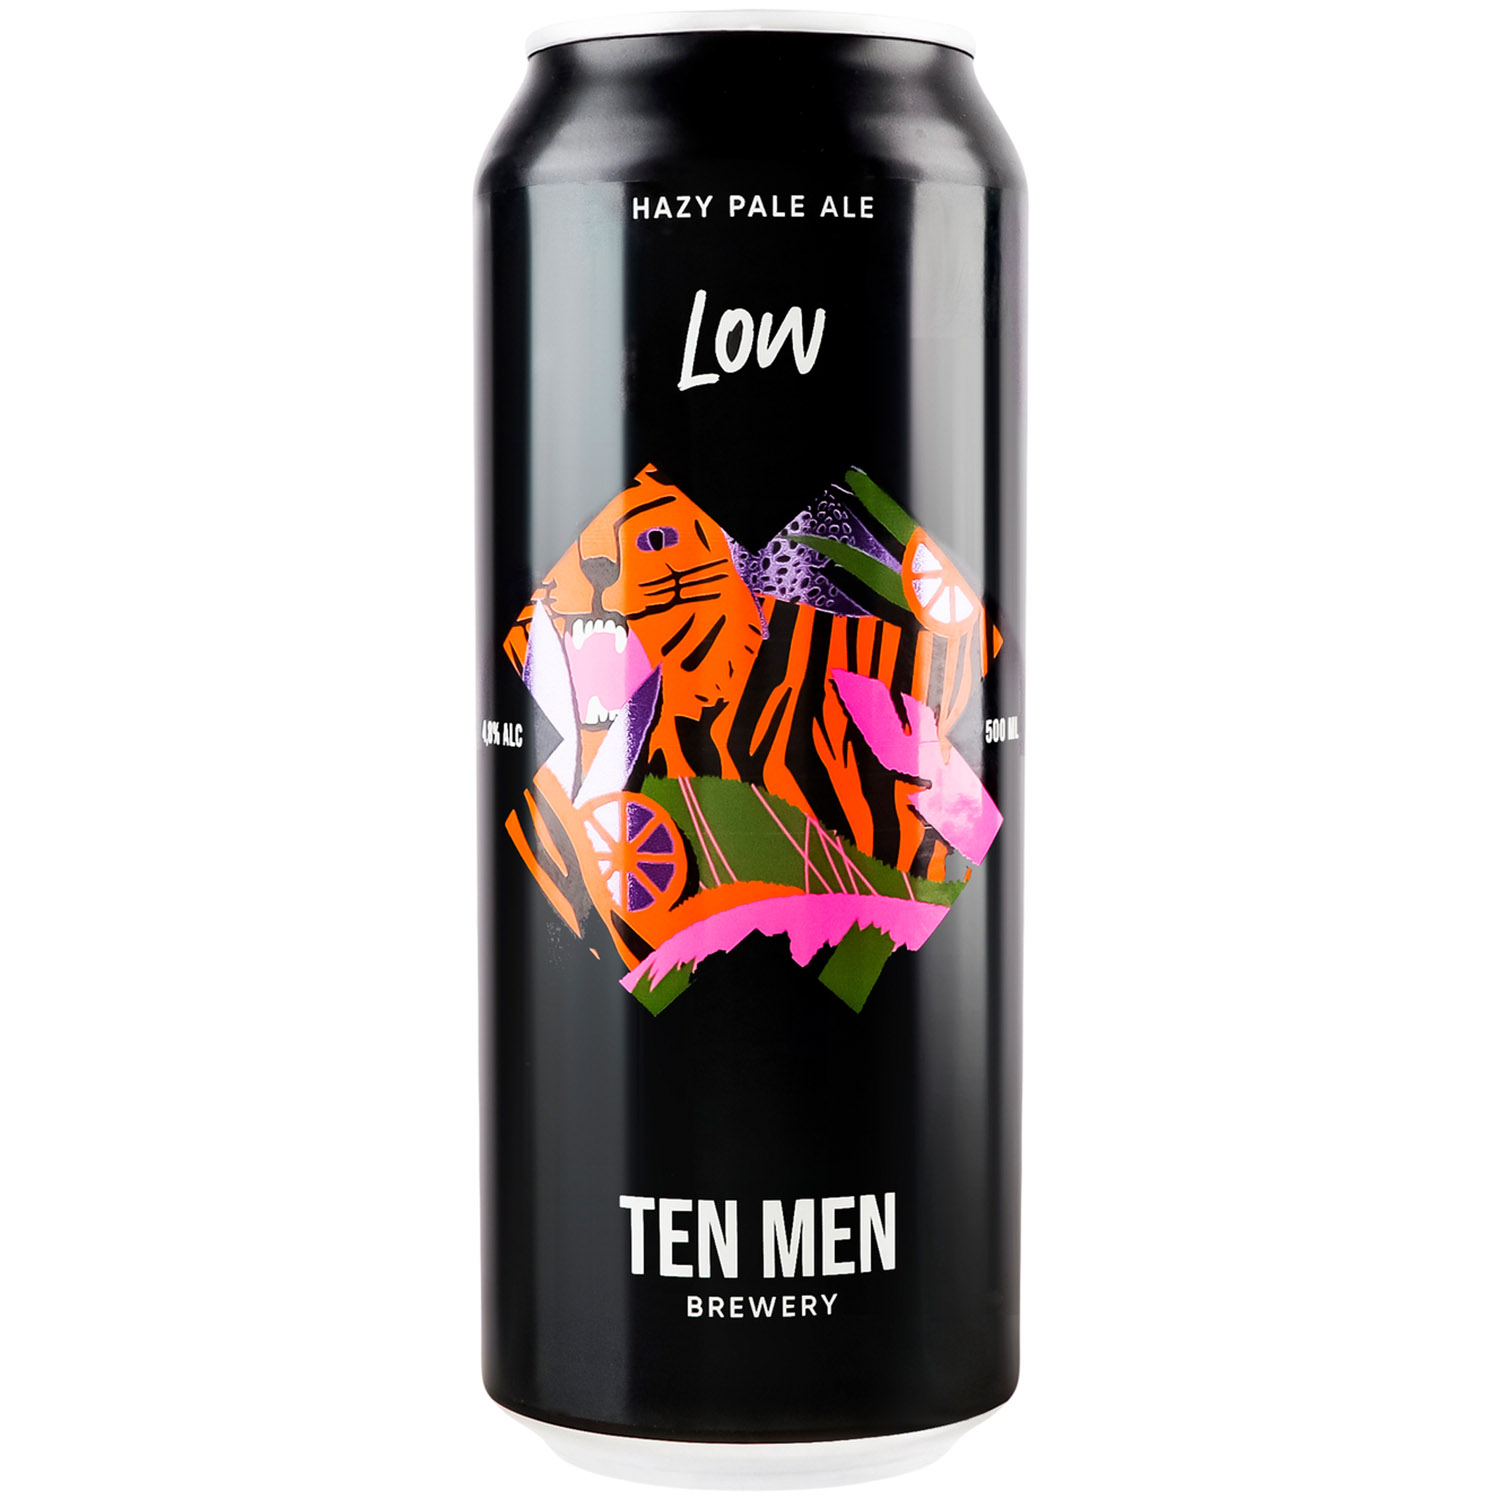 Пиво Ten Men Brewery Low Hazy Pale Ale, светлое, 4,8%, ж/б, 0,5 л - фото 1